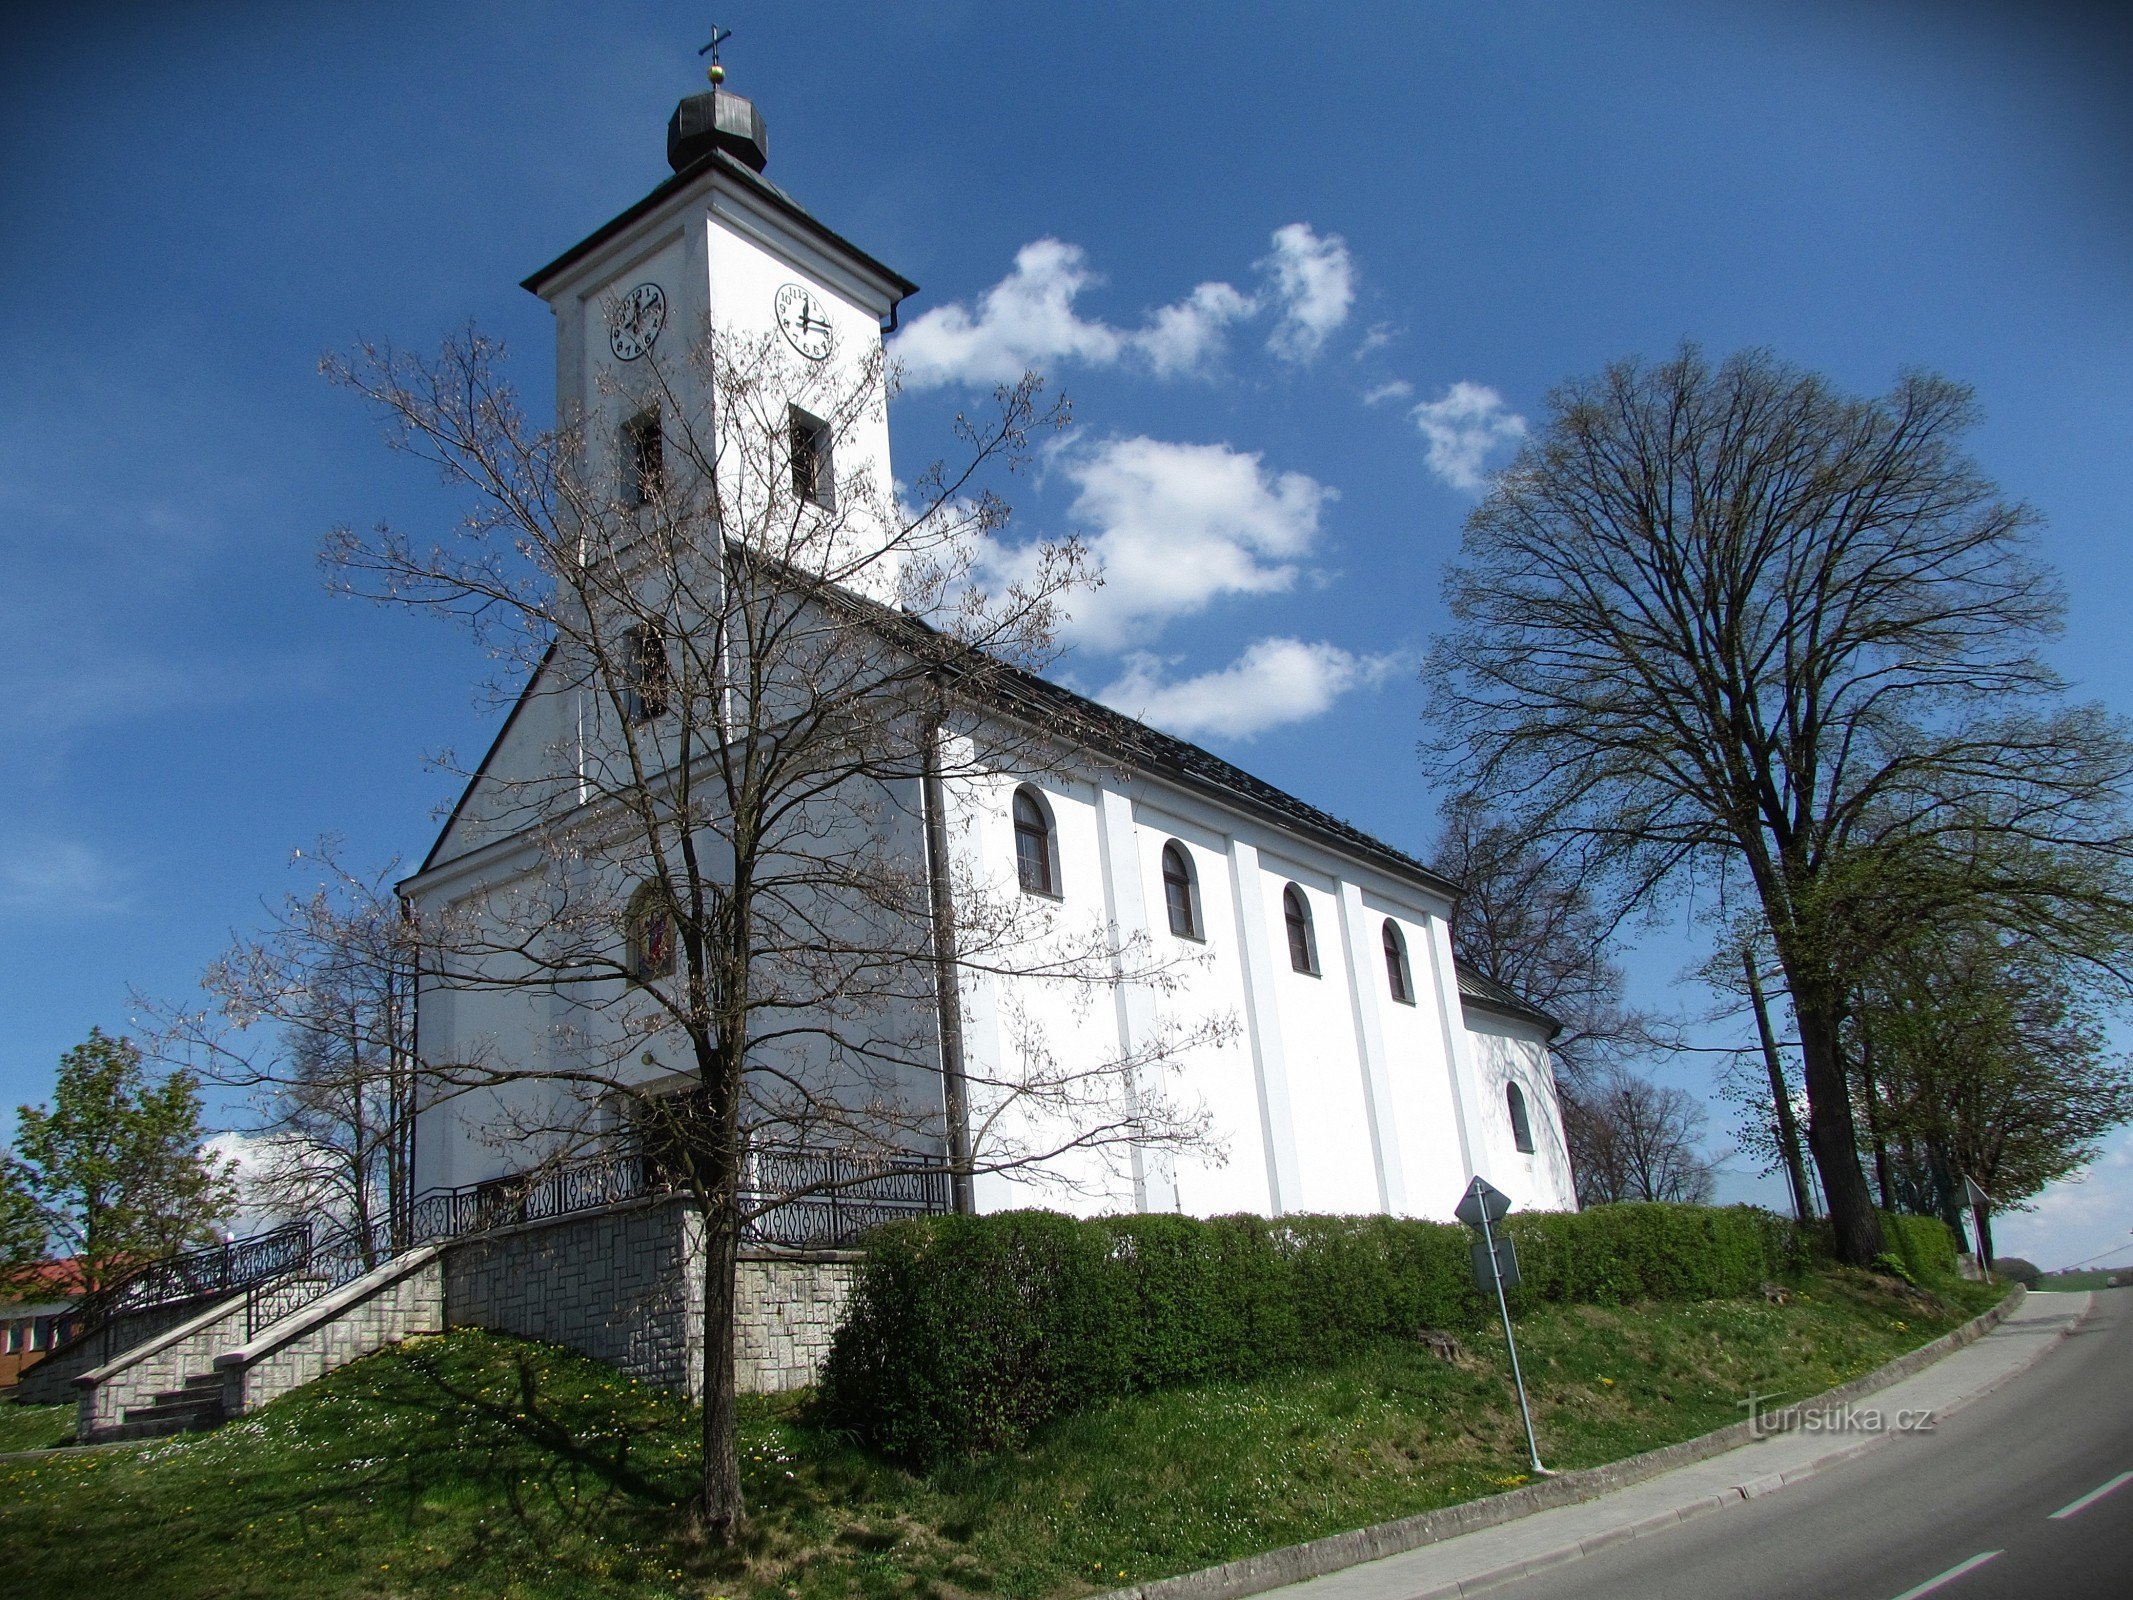 Slopné - εκκλησία του St. Roch